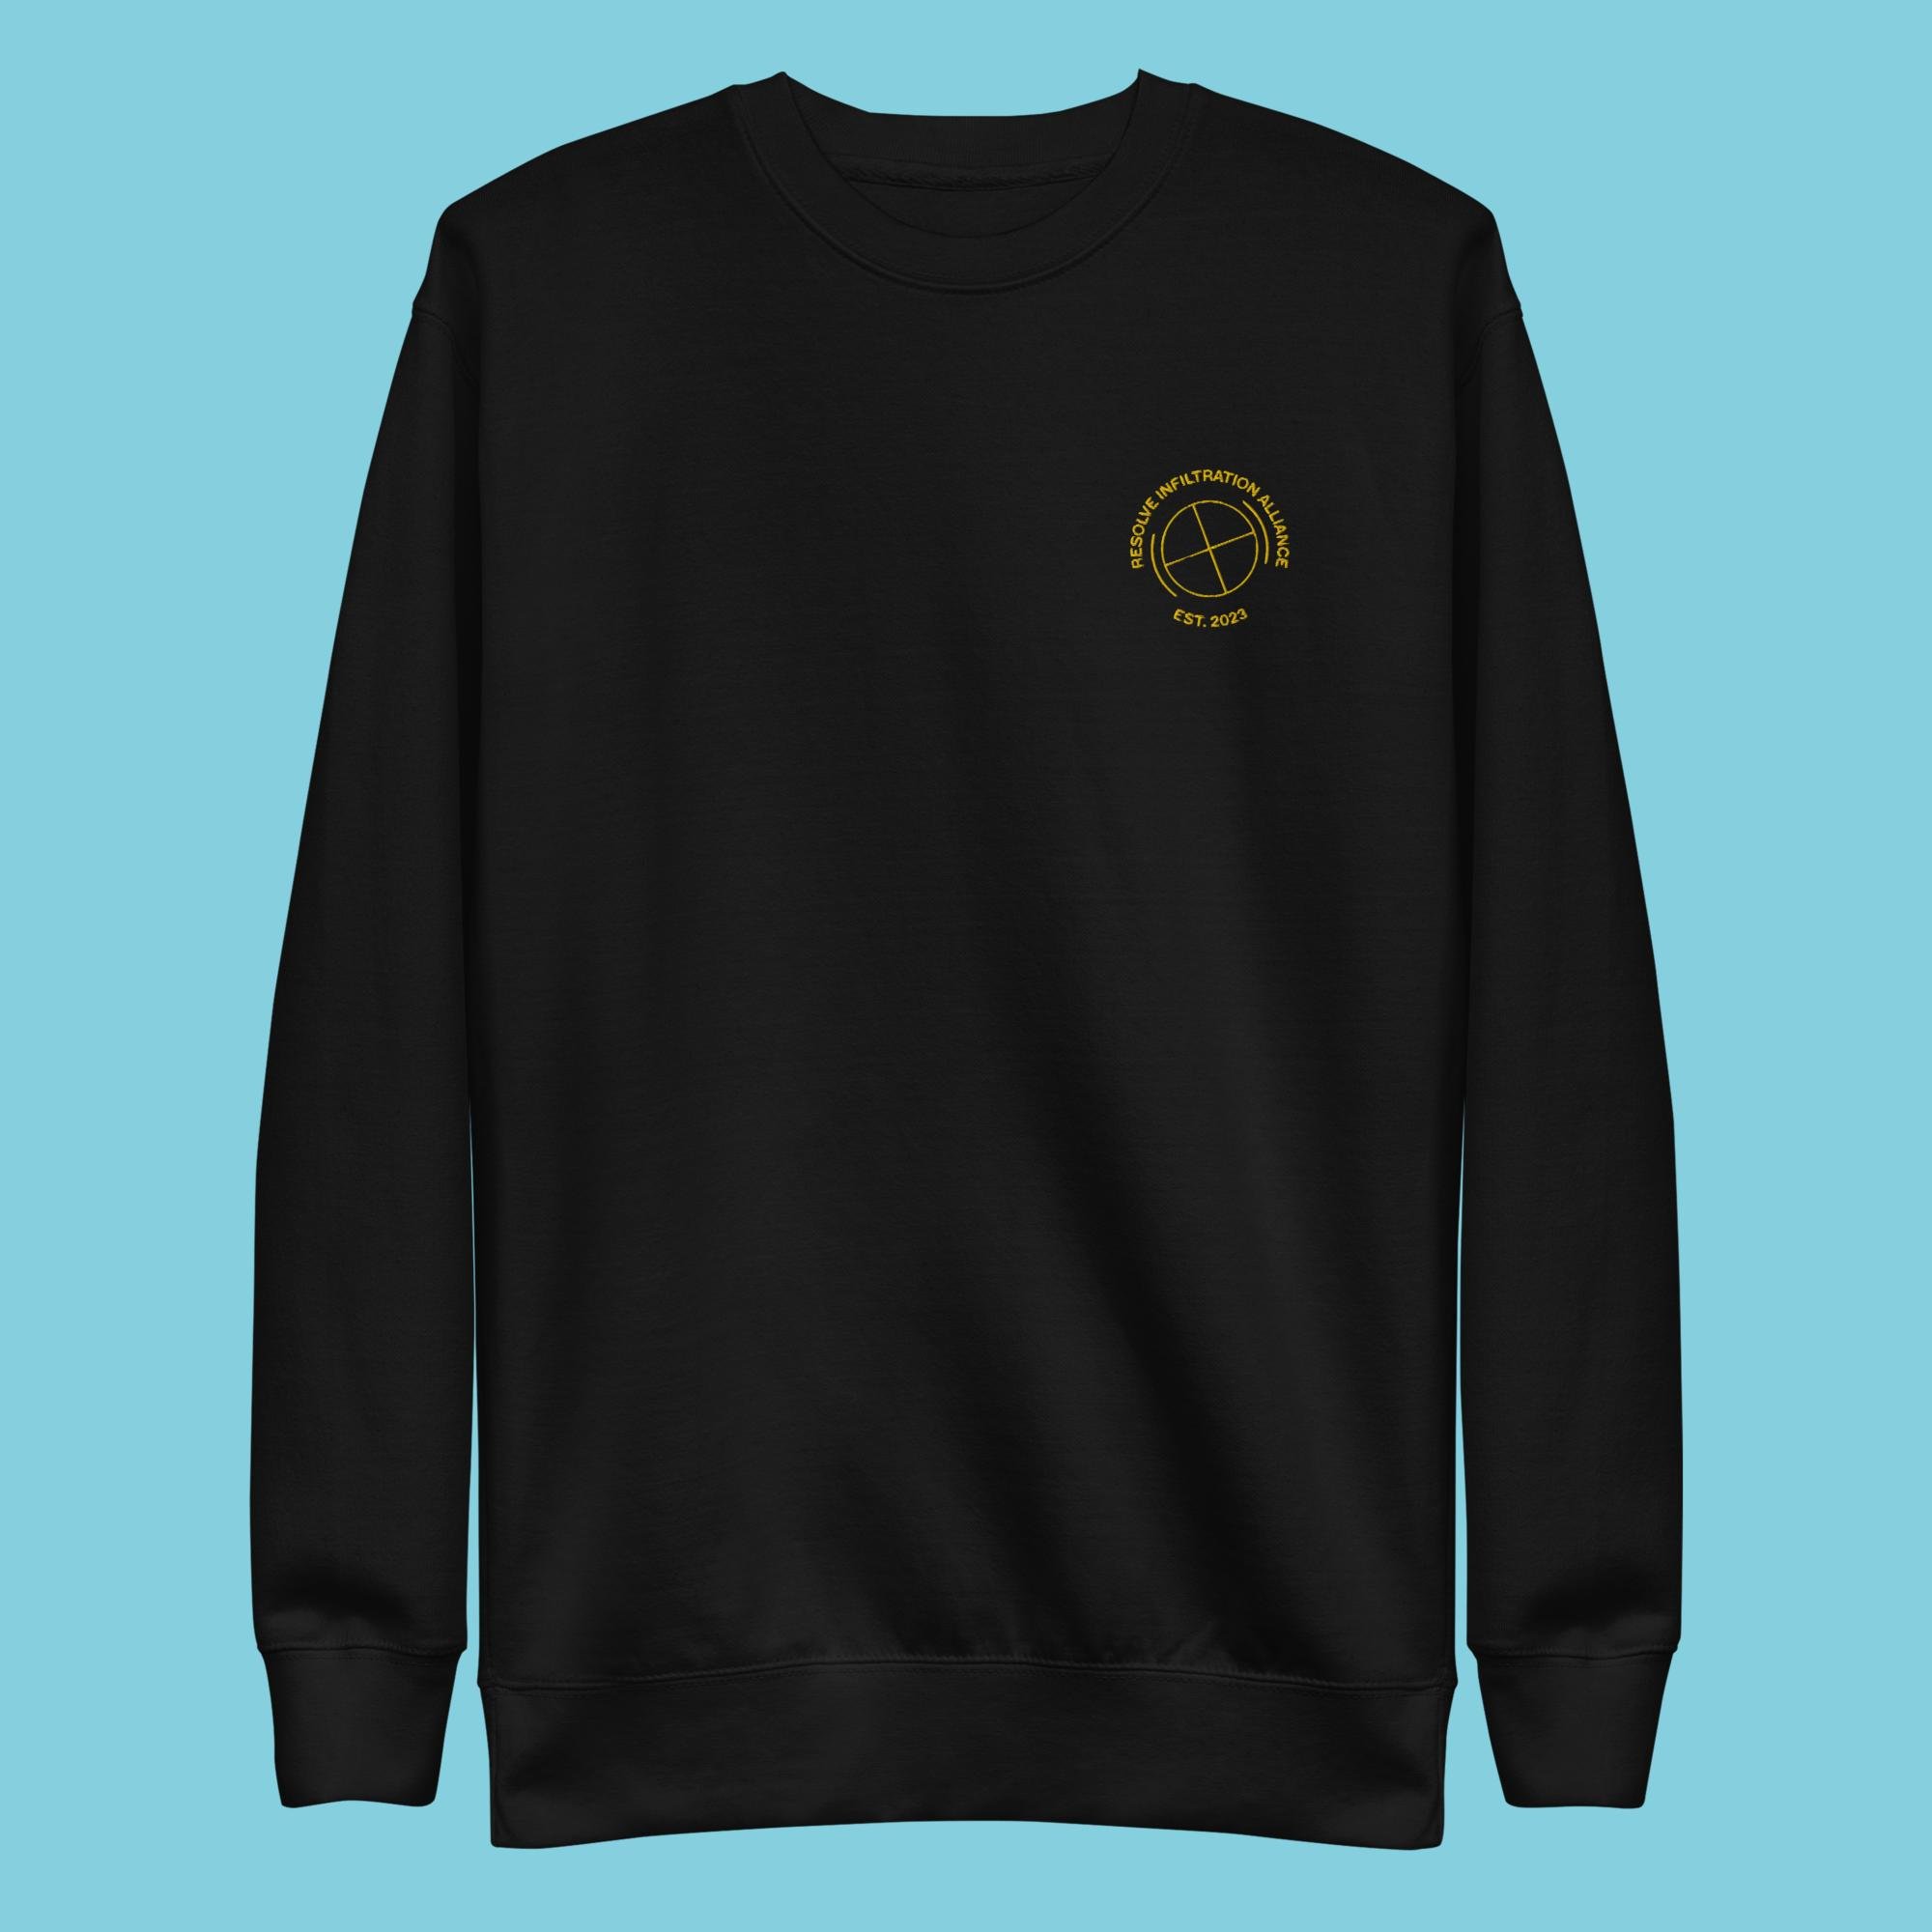 unisex-premium-sweatshirt-black-front-6500561f6e520.jpg